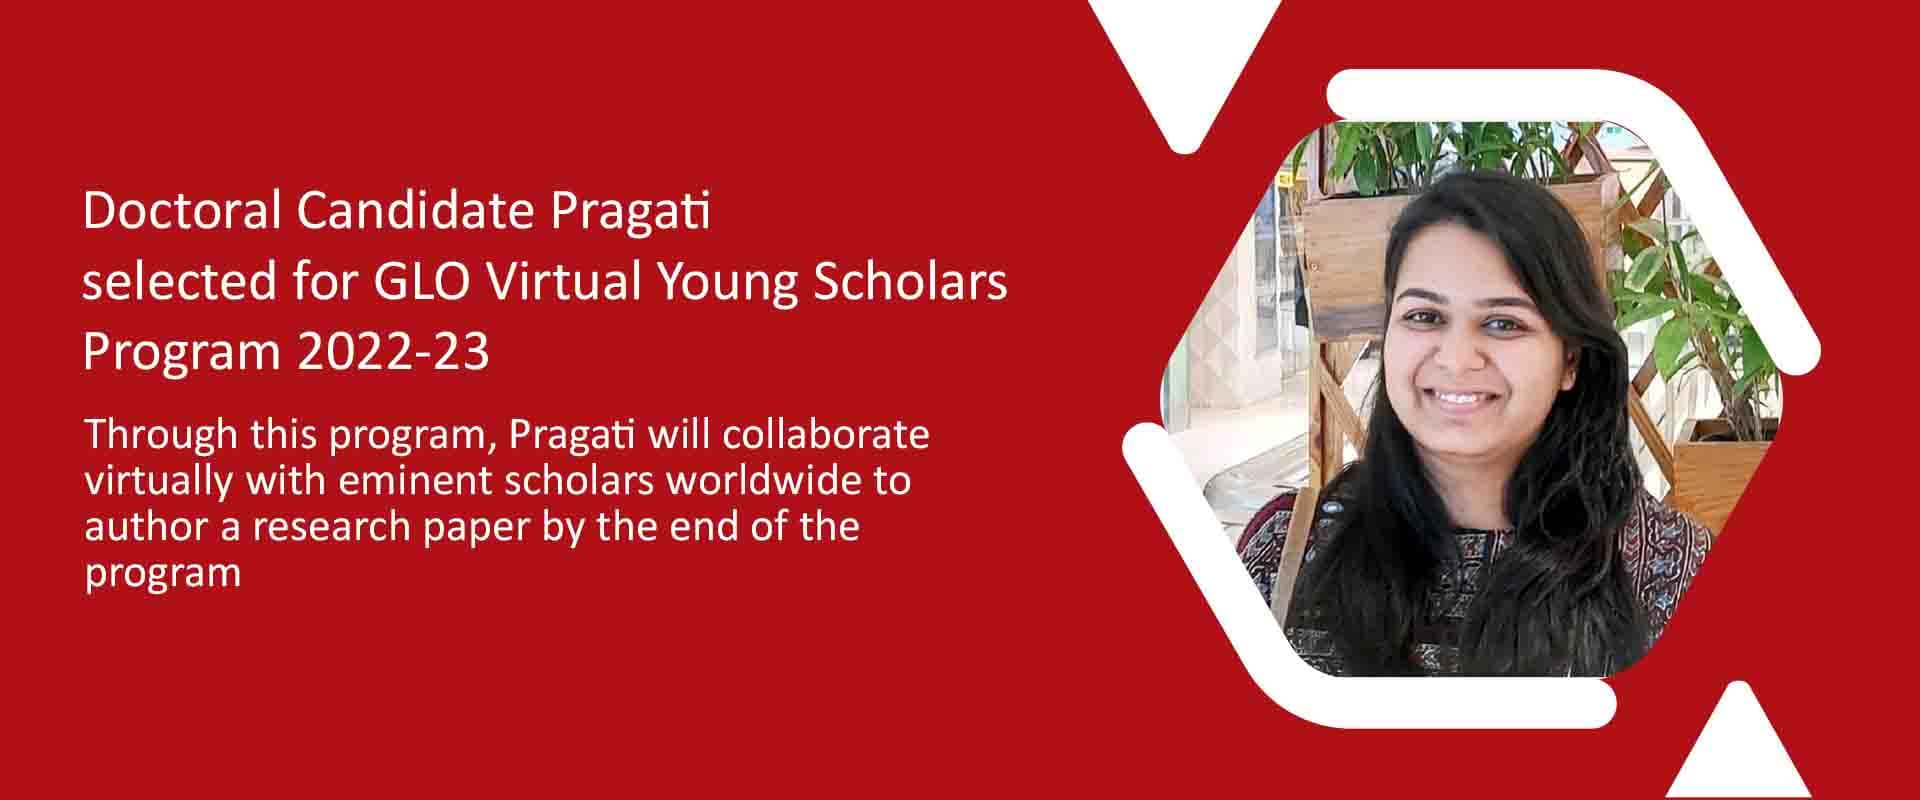 IIM Bangalore’s Doctoral Candidate Pragati selected for GLO Virtual Young Scholars Program 2022-23